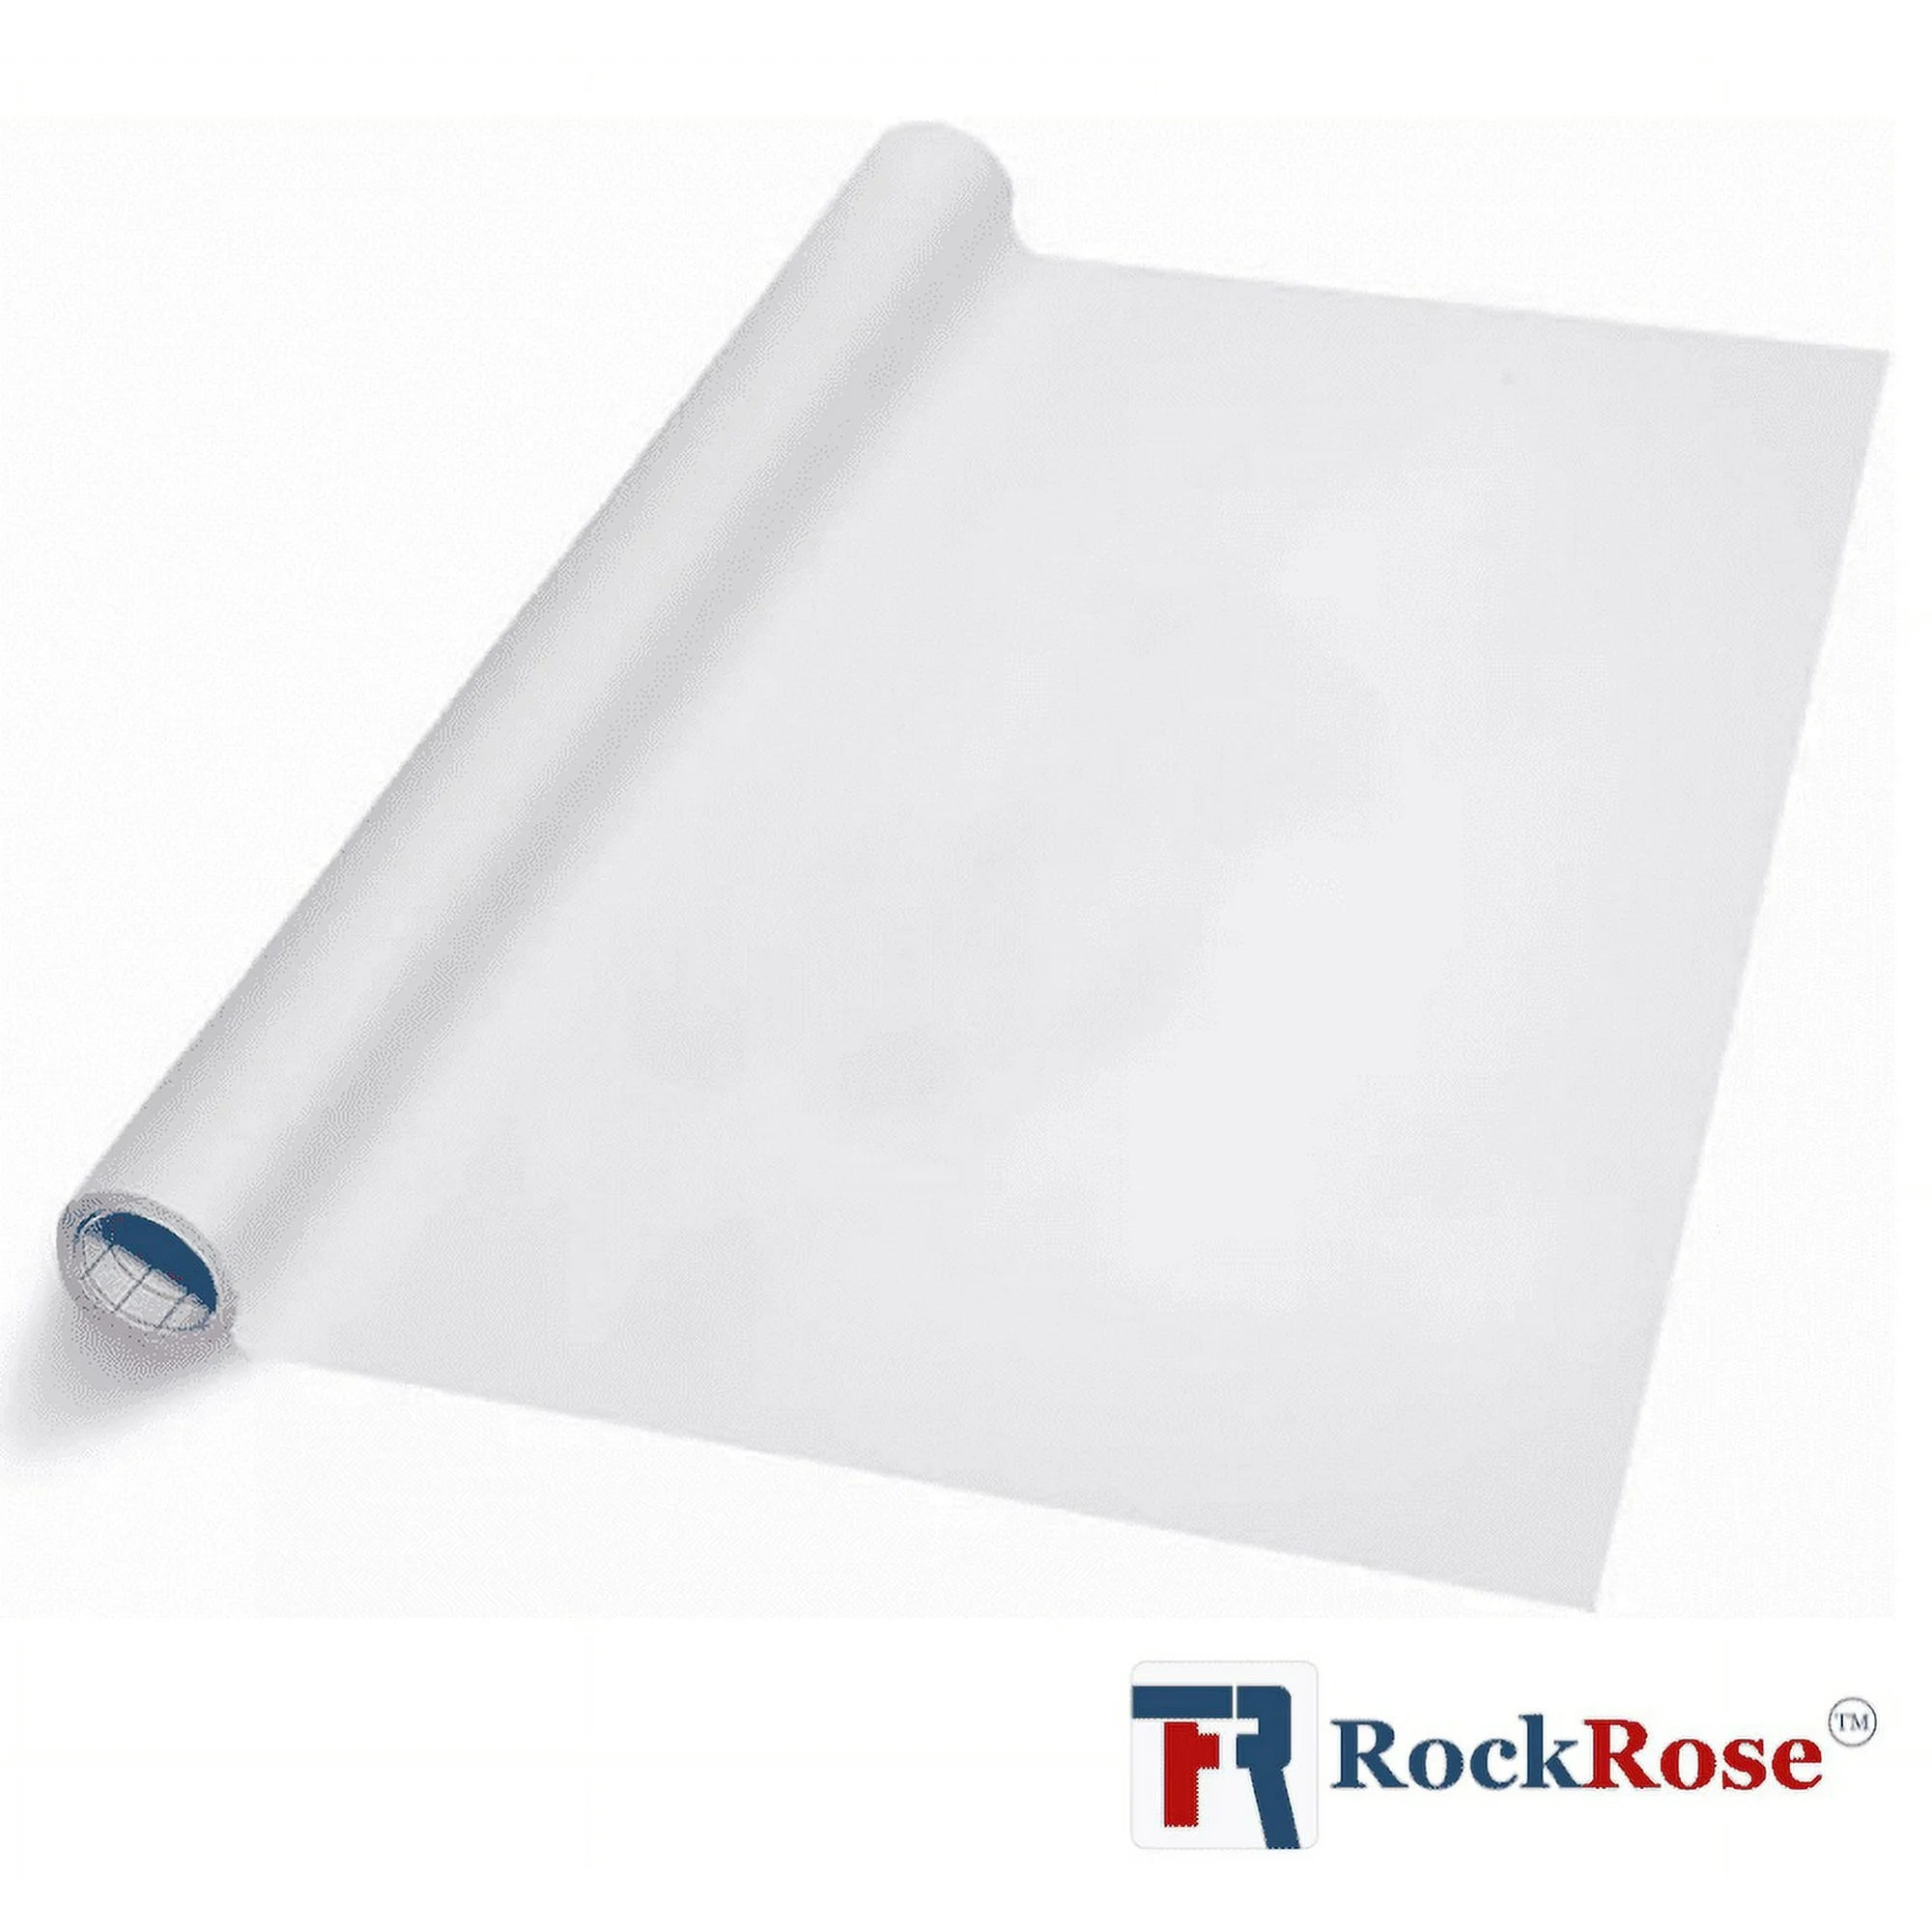 Rockrose Dry Erase Whiteboard Sticker 48 inch x 72 inch, Size: 48 x 72